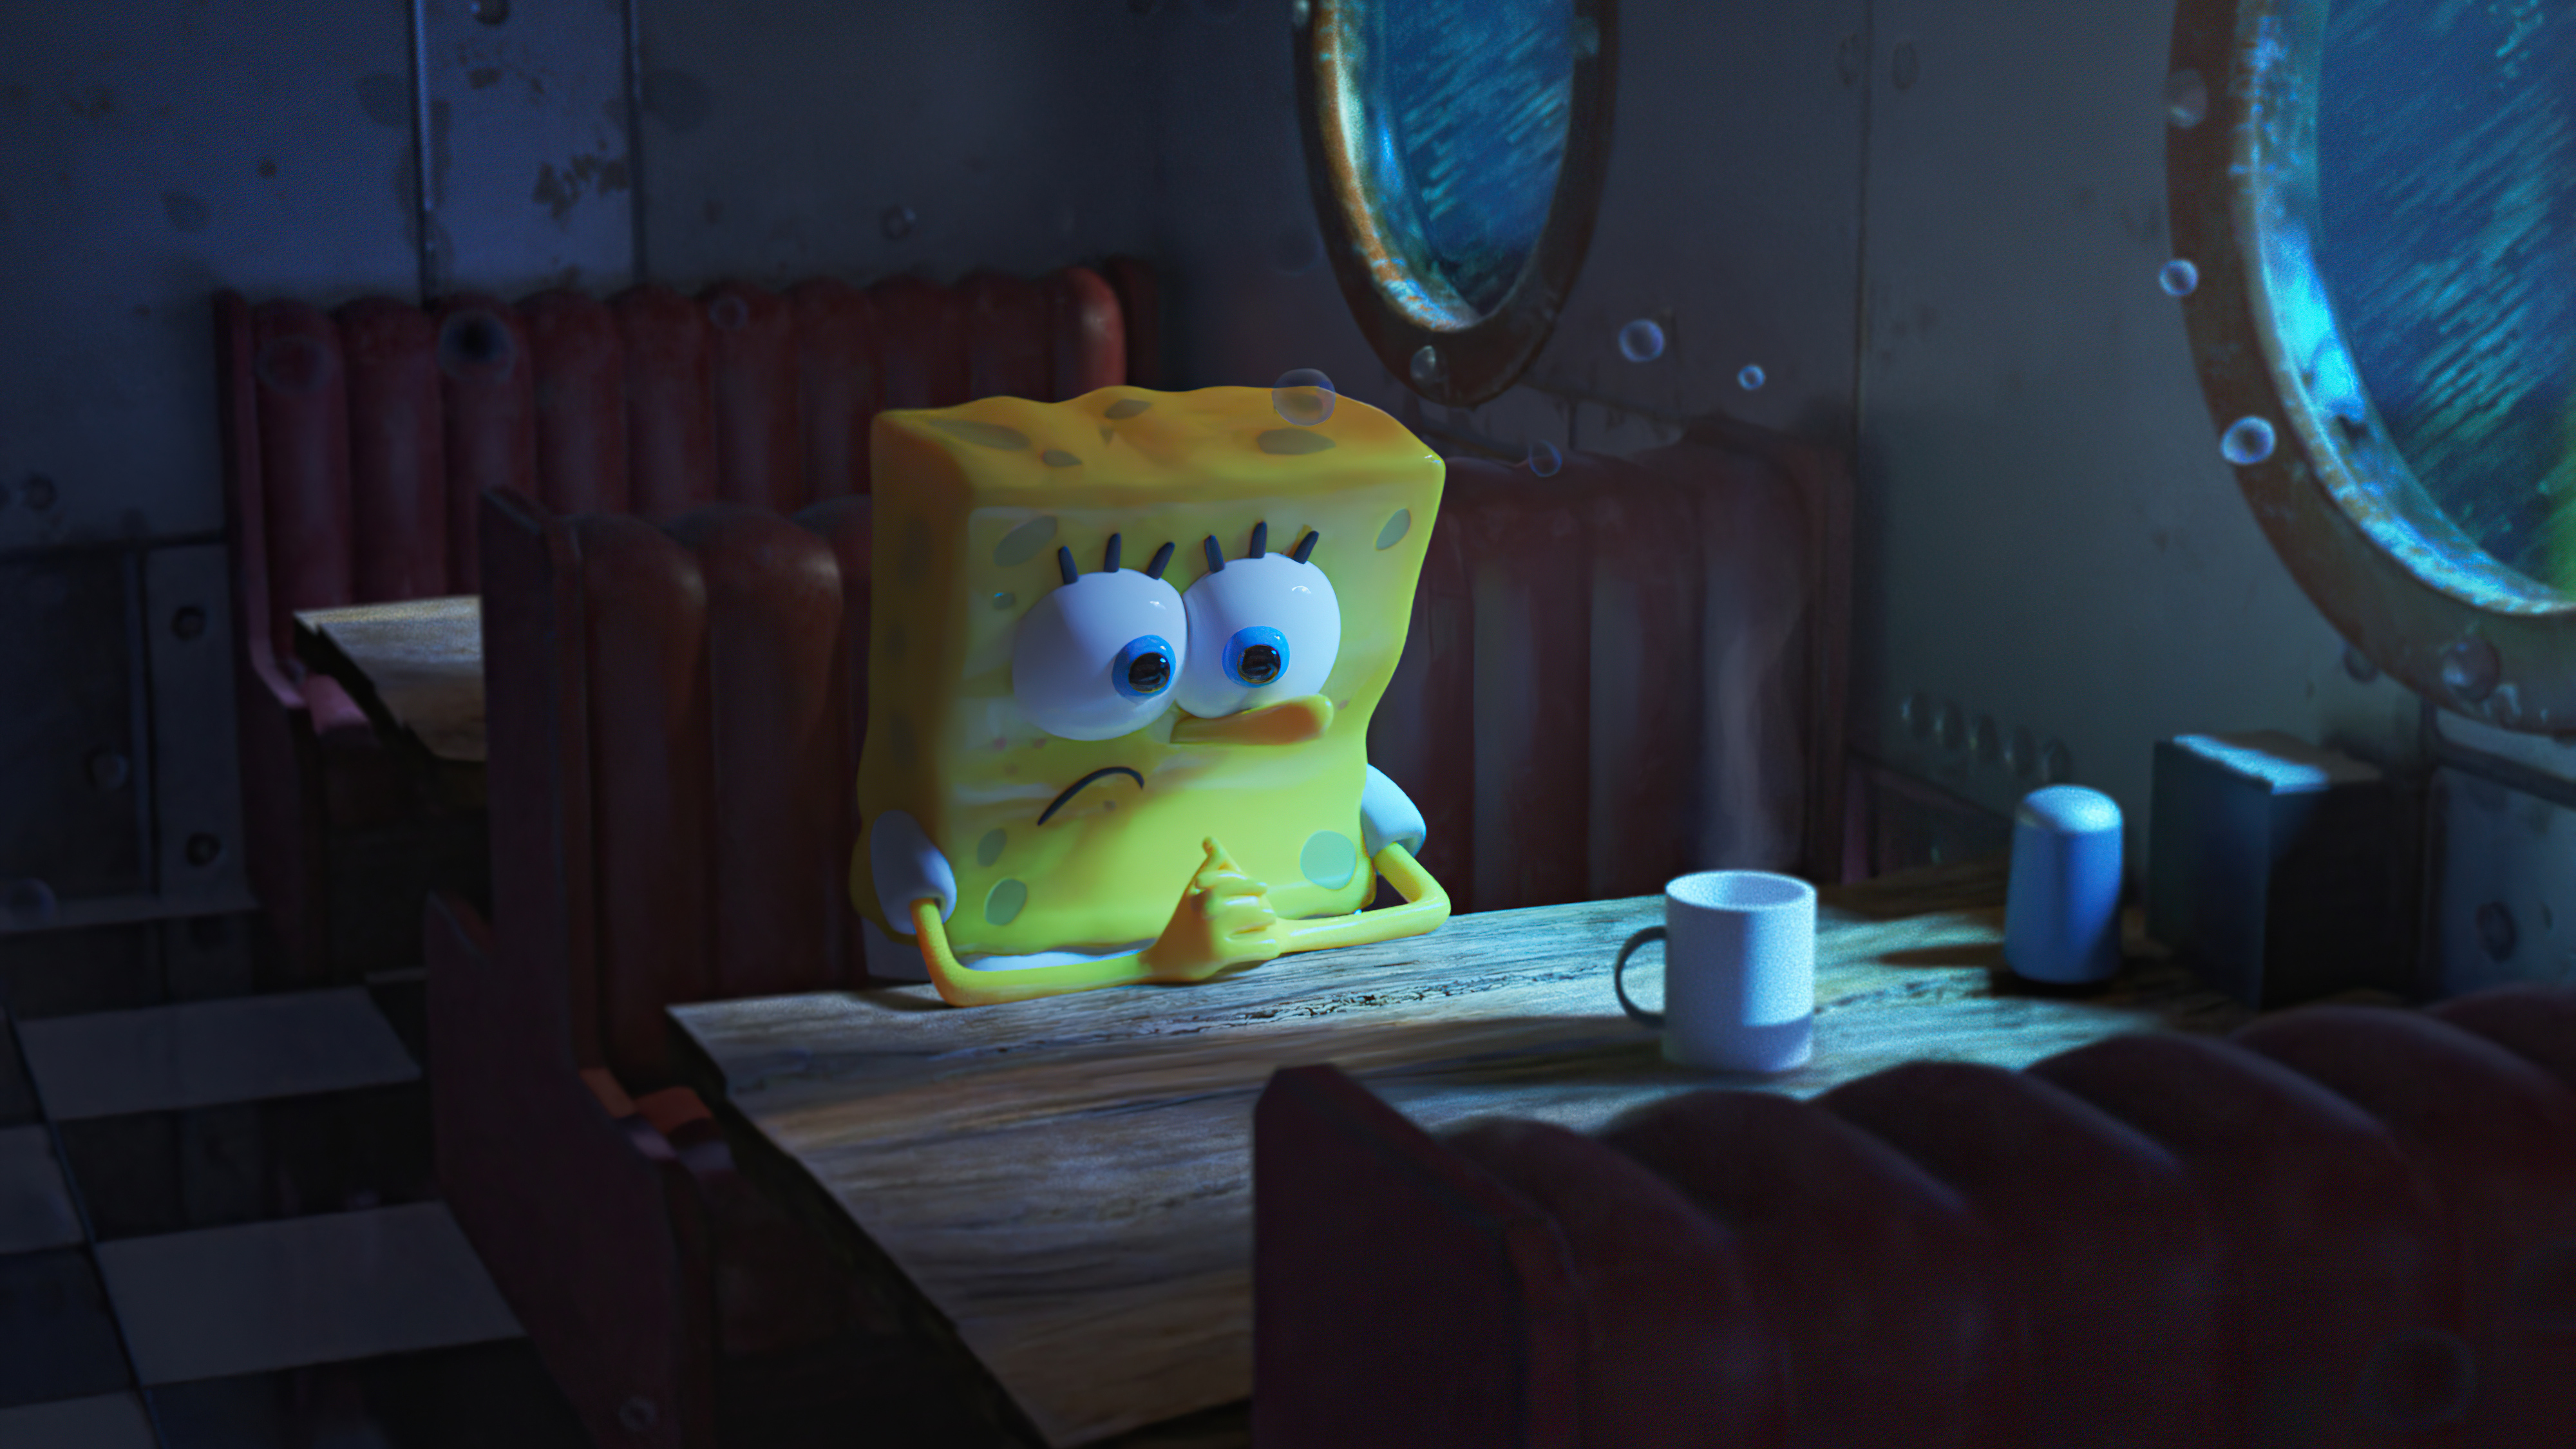 Lonely Spongebob by Dylan Emot